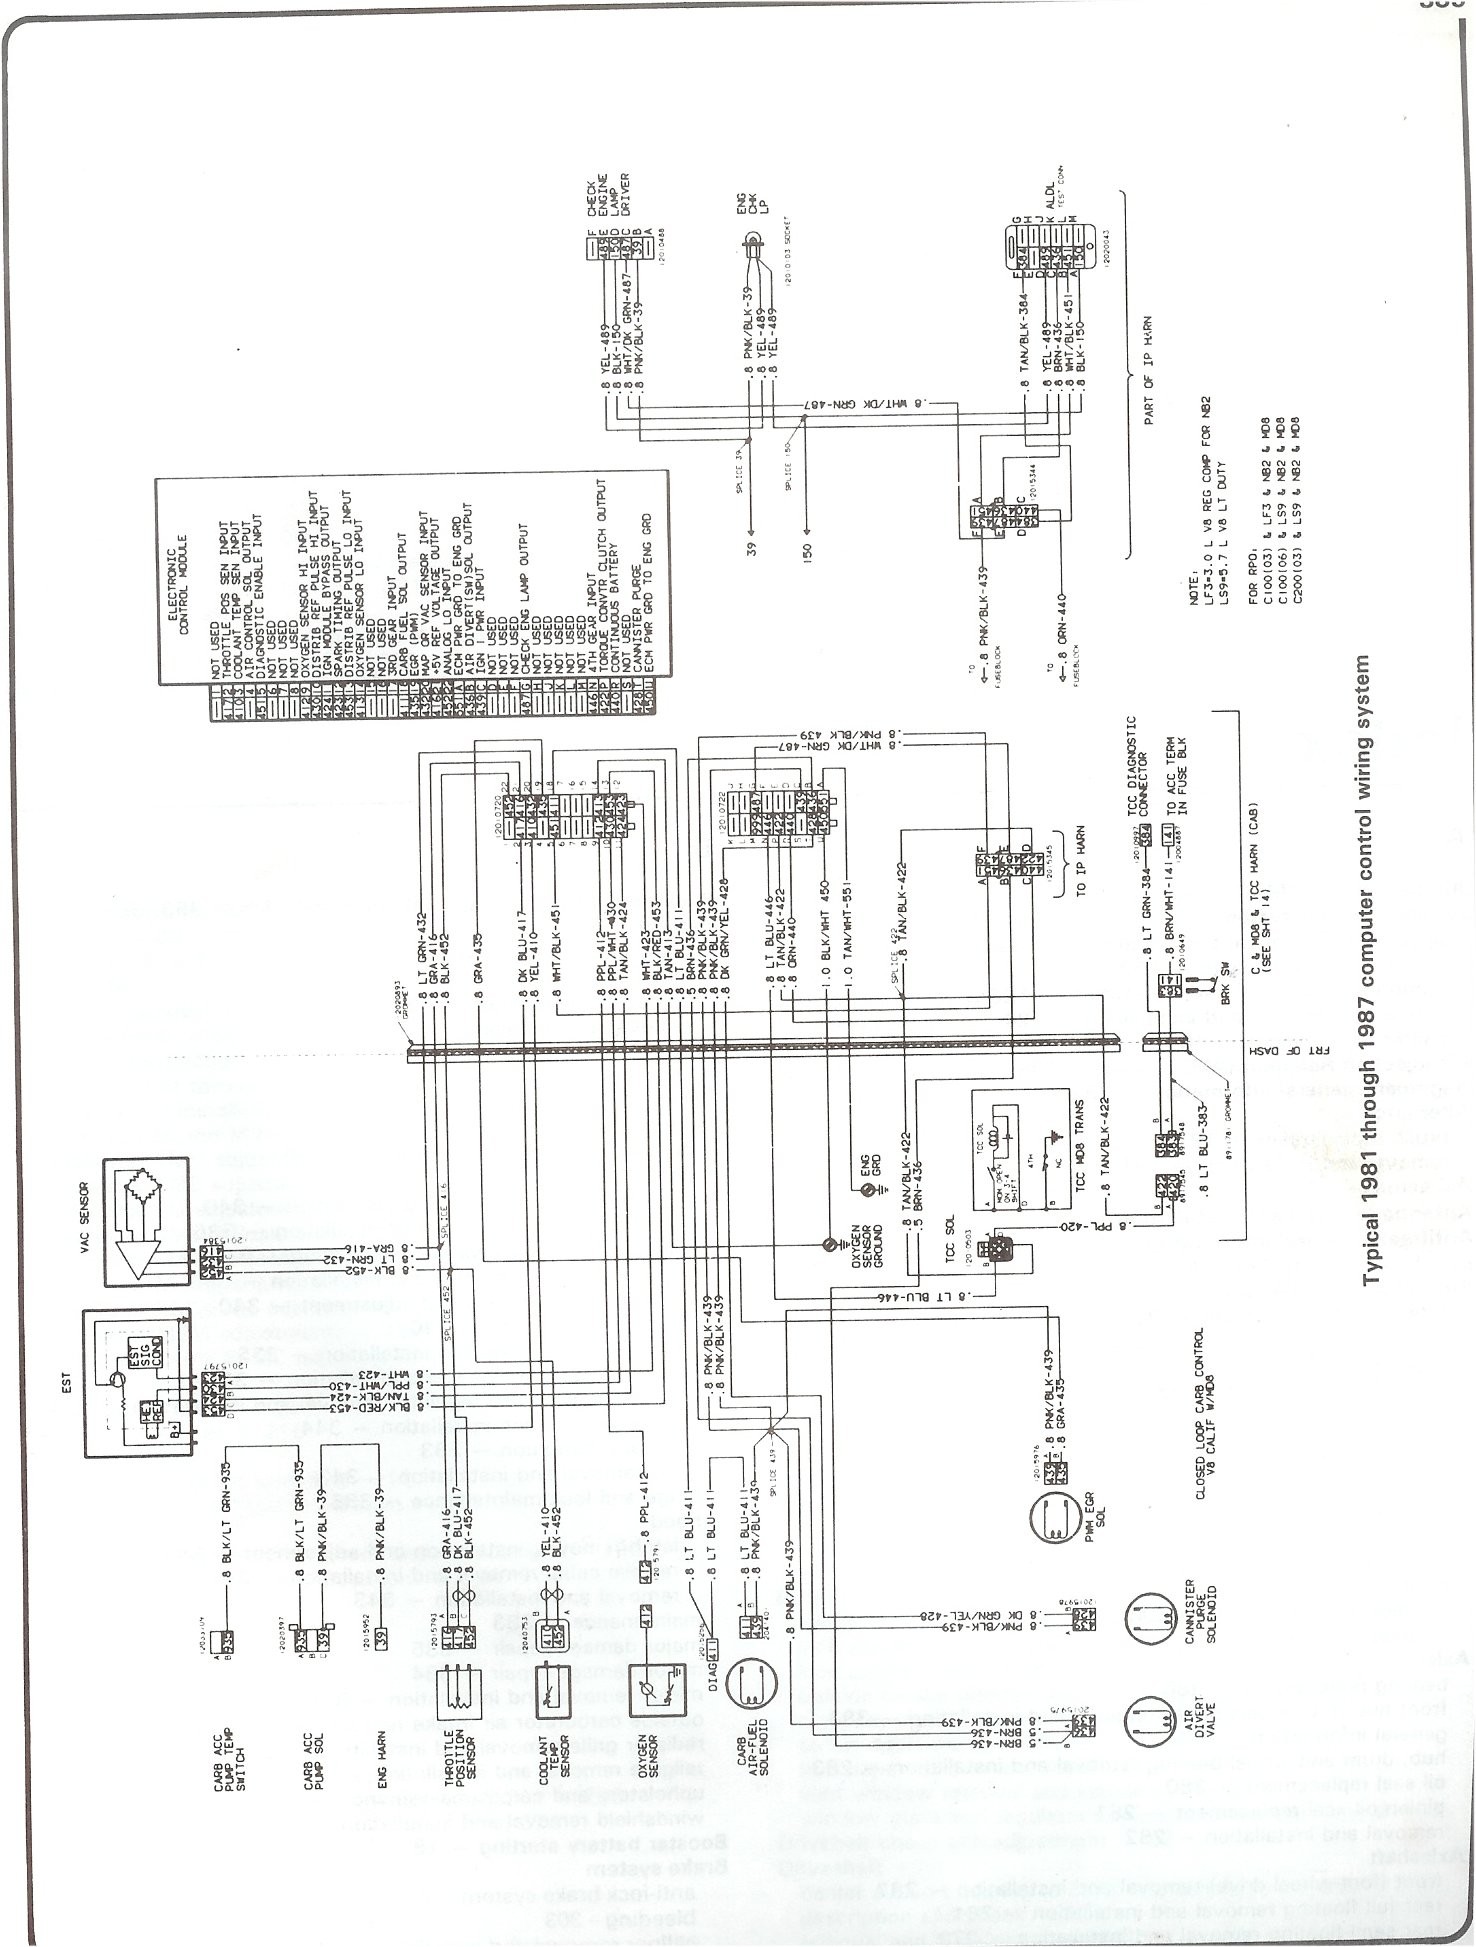 2004 Chevy Colorado Wiring Diagram from mainetreasurechest.com